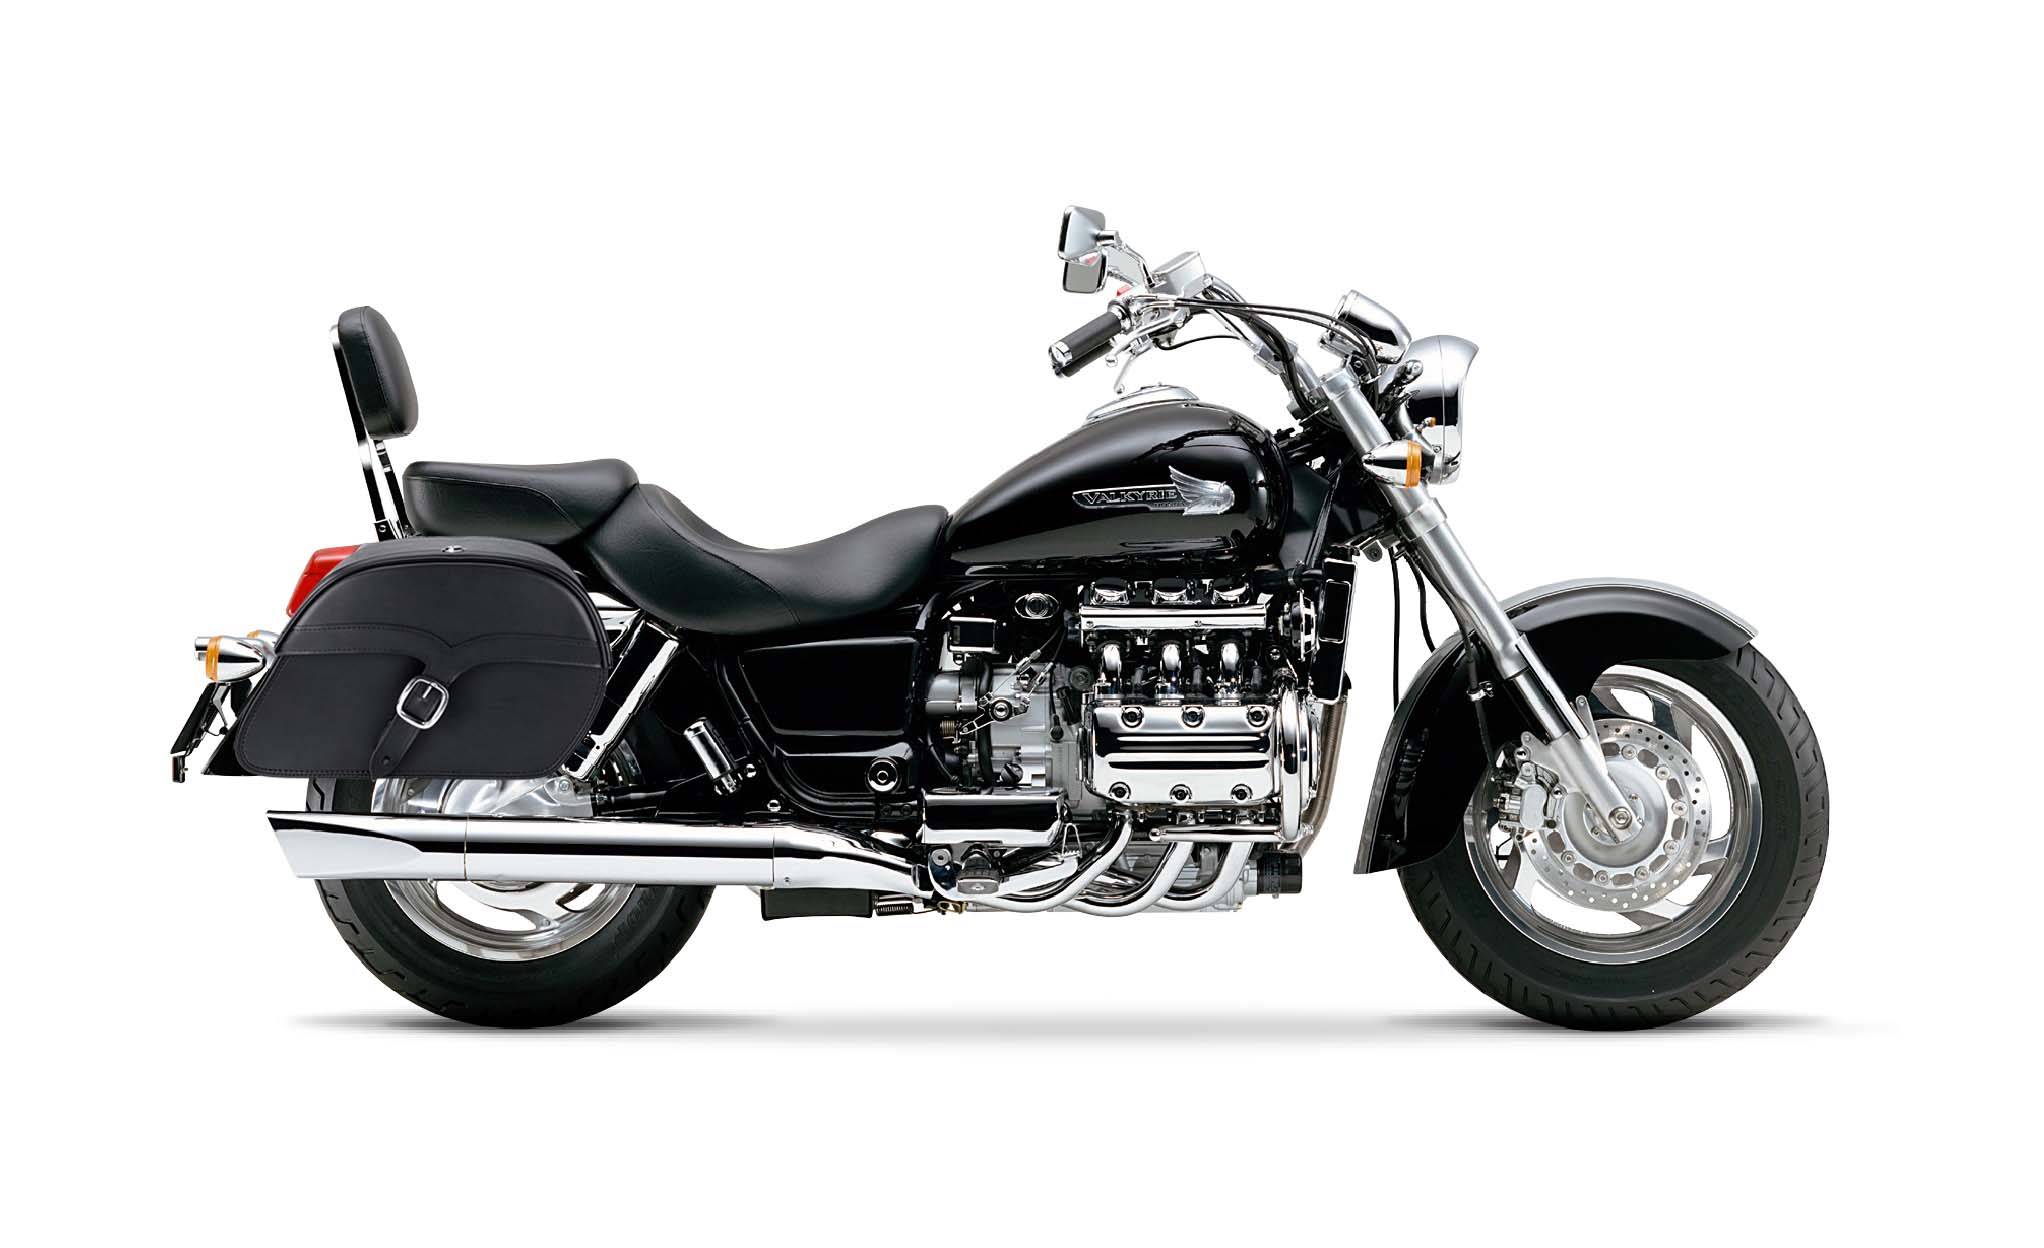 Viking Vintage Large Honda Valkyrie 1500 Standard Shock Cut Out Leather Motorcycle Saddlebags on Bike Photo @expand